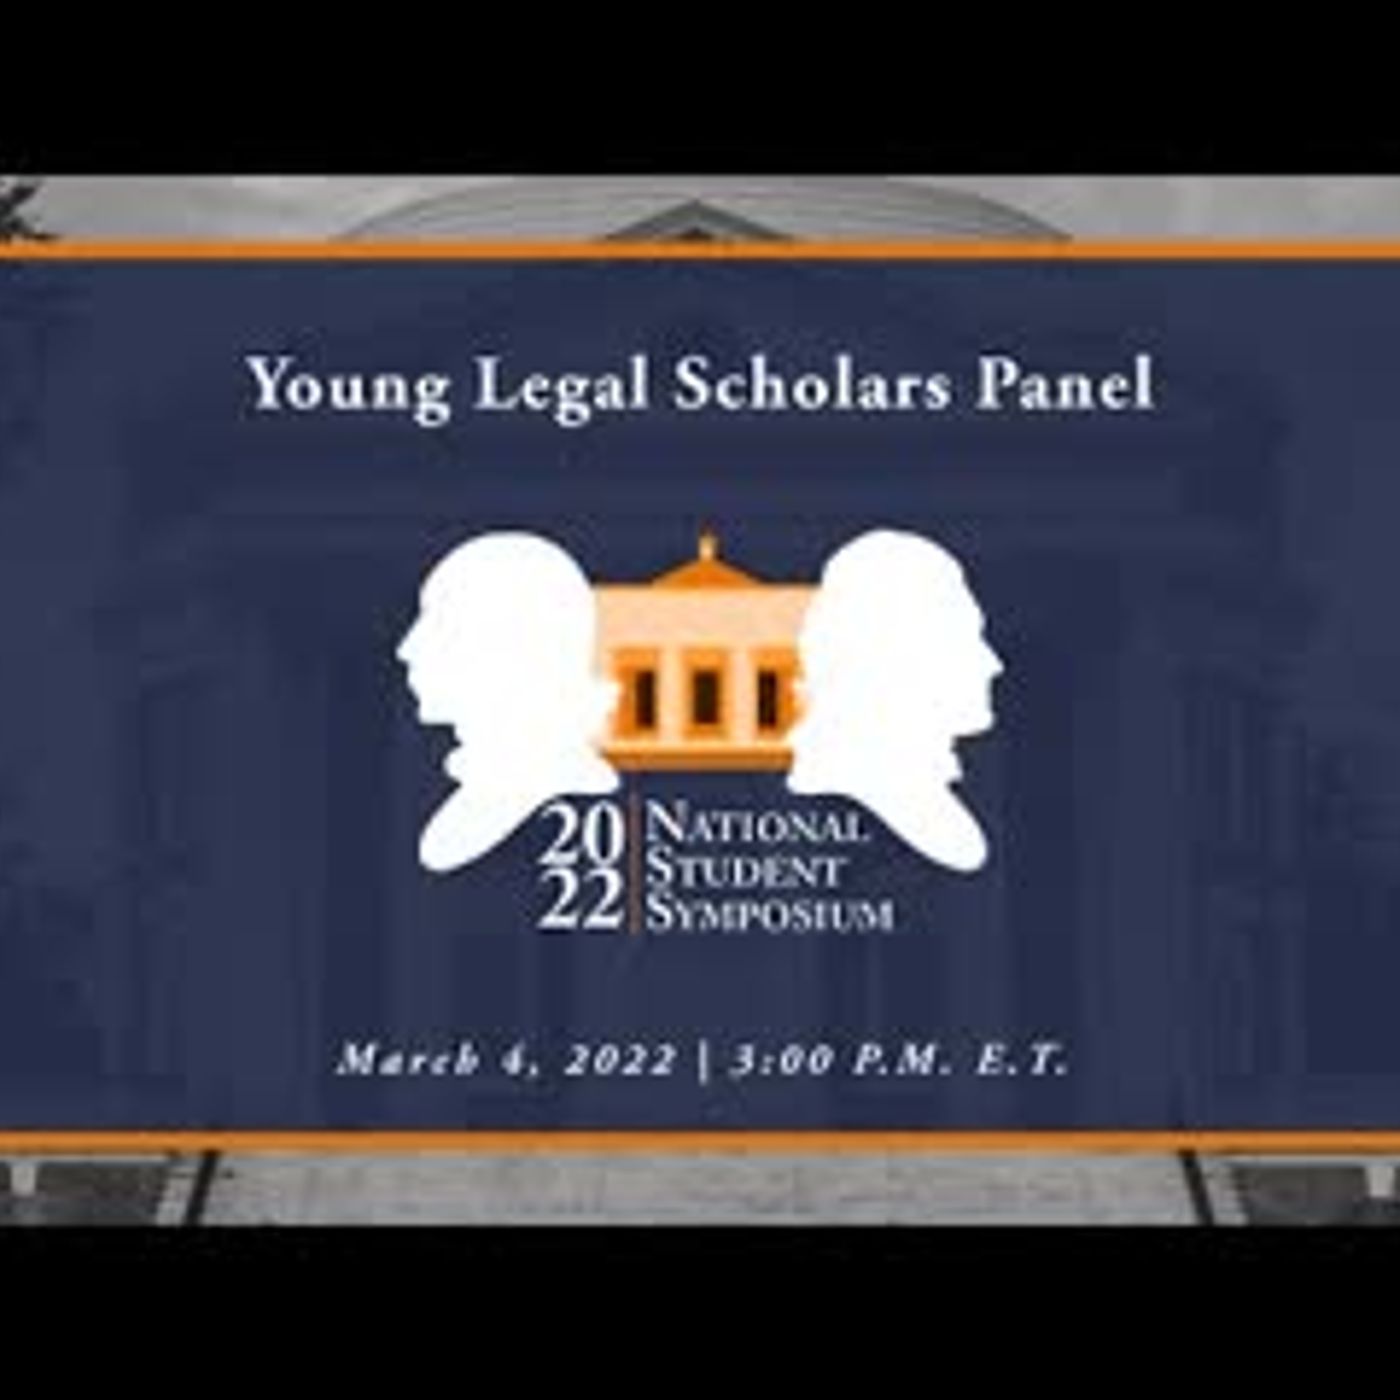 Pre-Symposium Panel: Young Legal Scholars